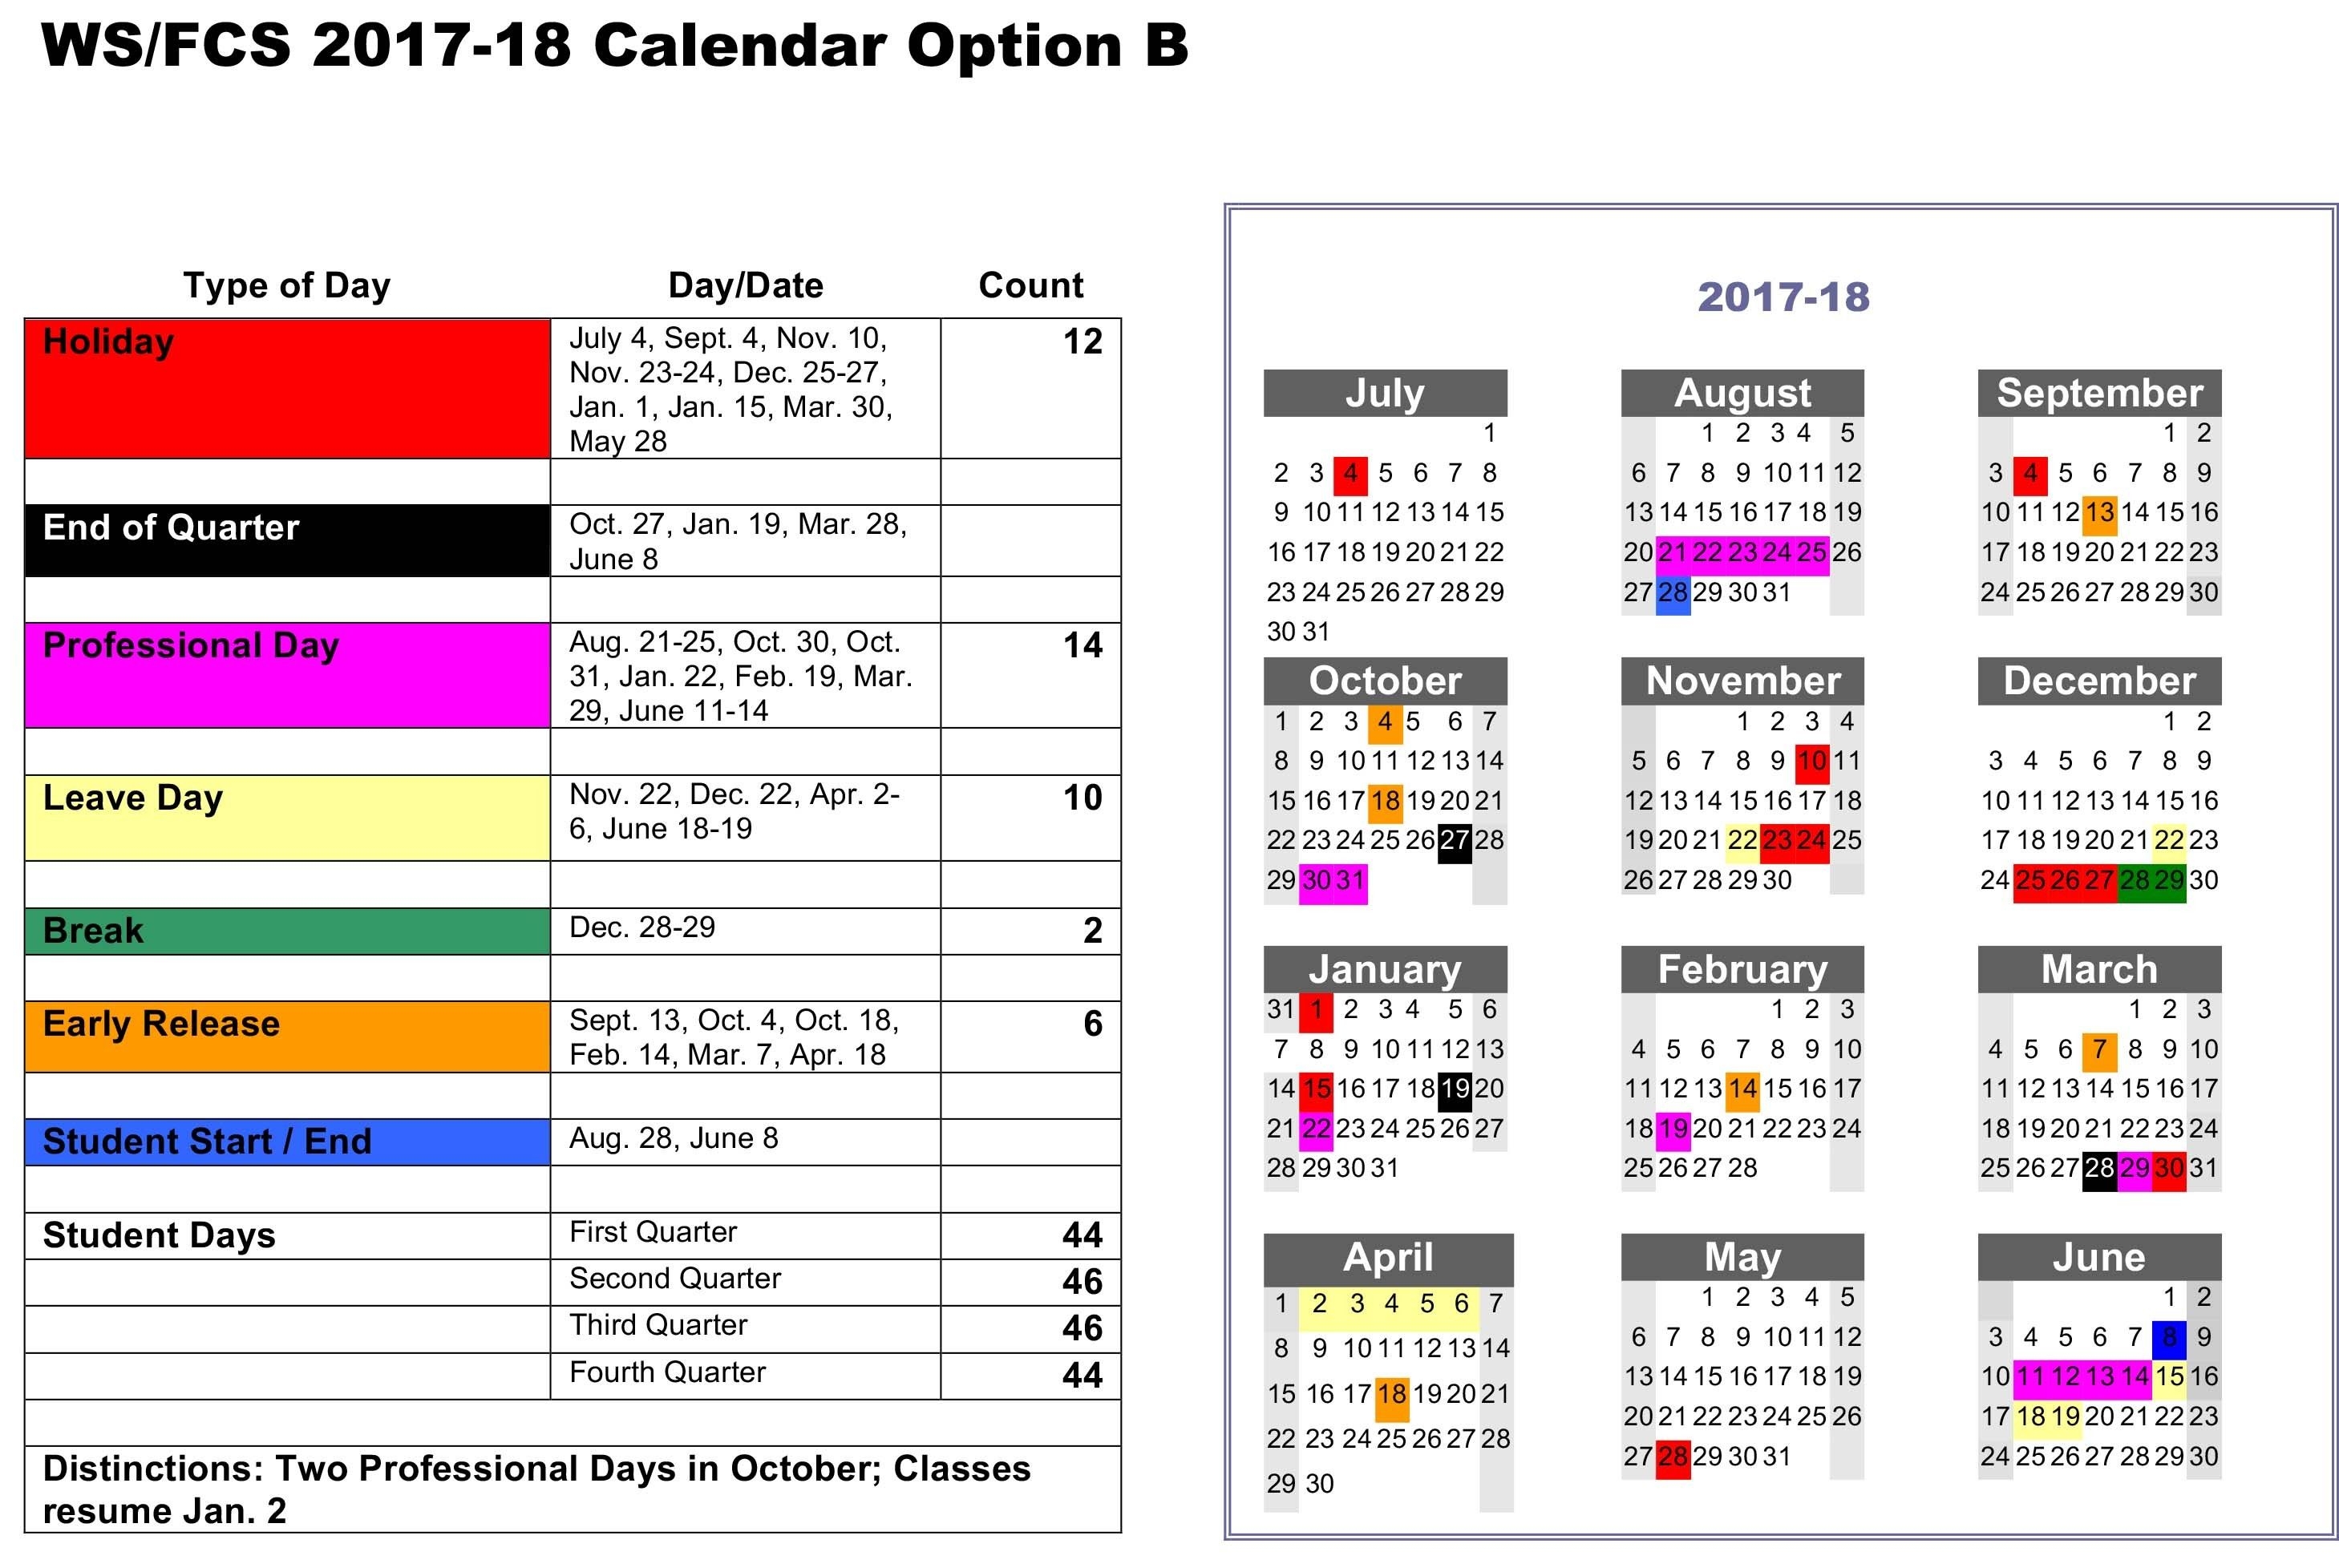 Forsyth County School Calendar